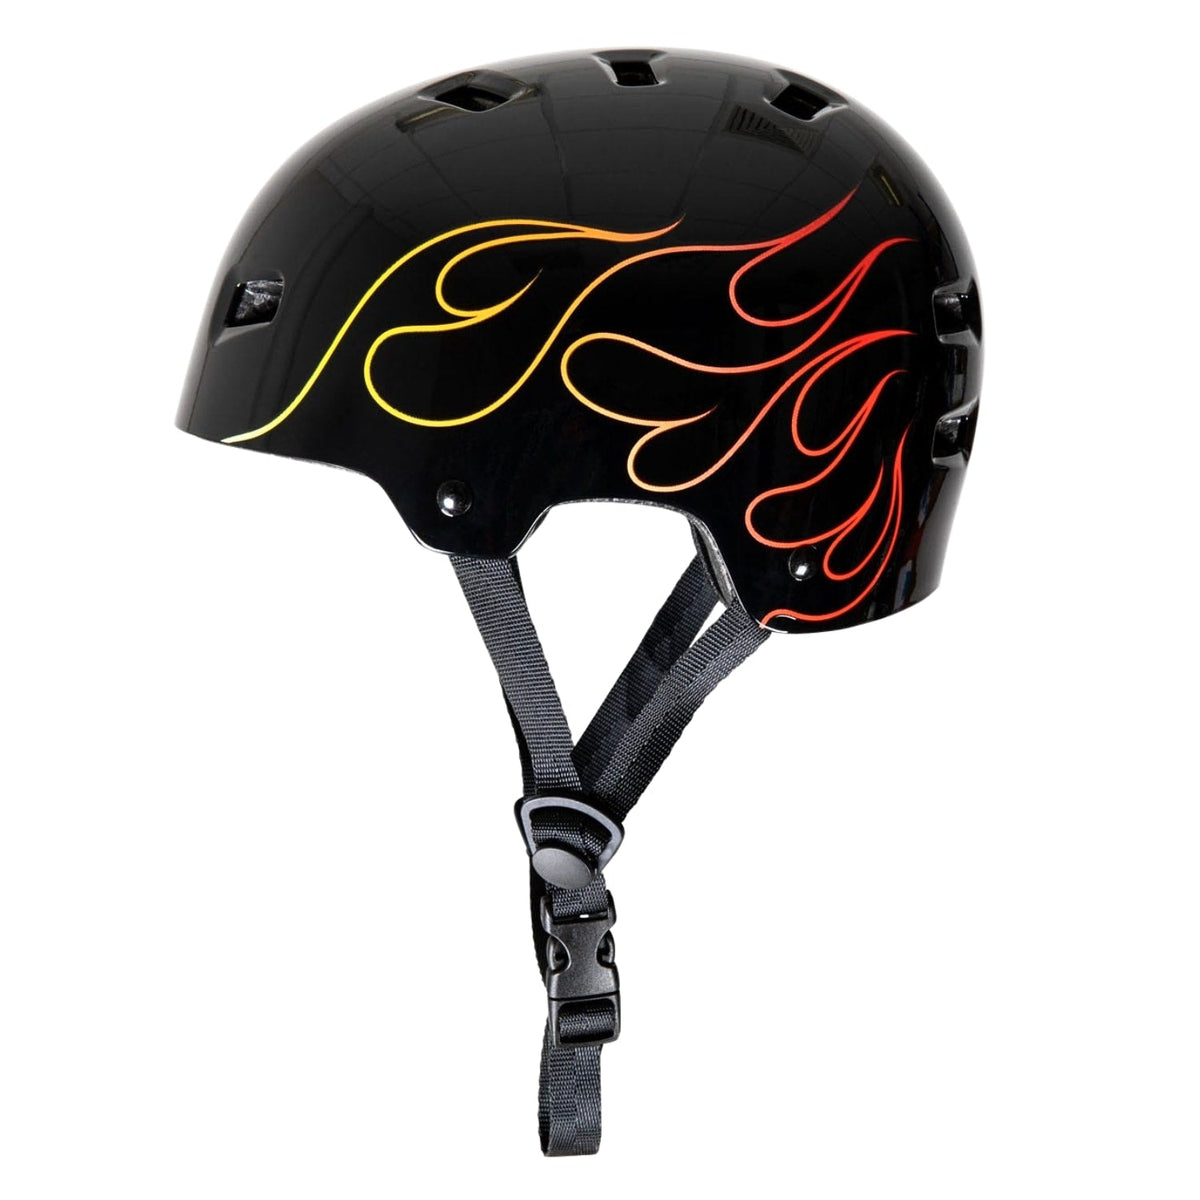 Bullet Deluxe Flame Graphic Kids Youth Helmet - Black/Flame - Skateboard Helmet by Bullet OSFA (49-54cm)